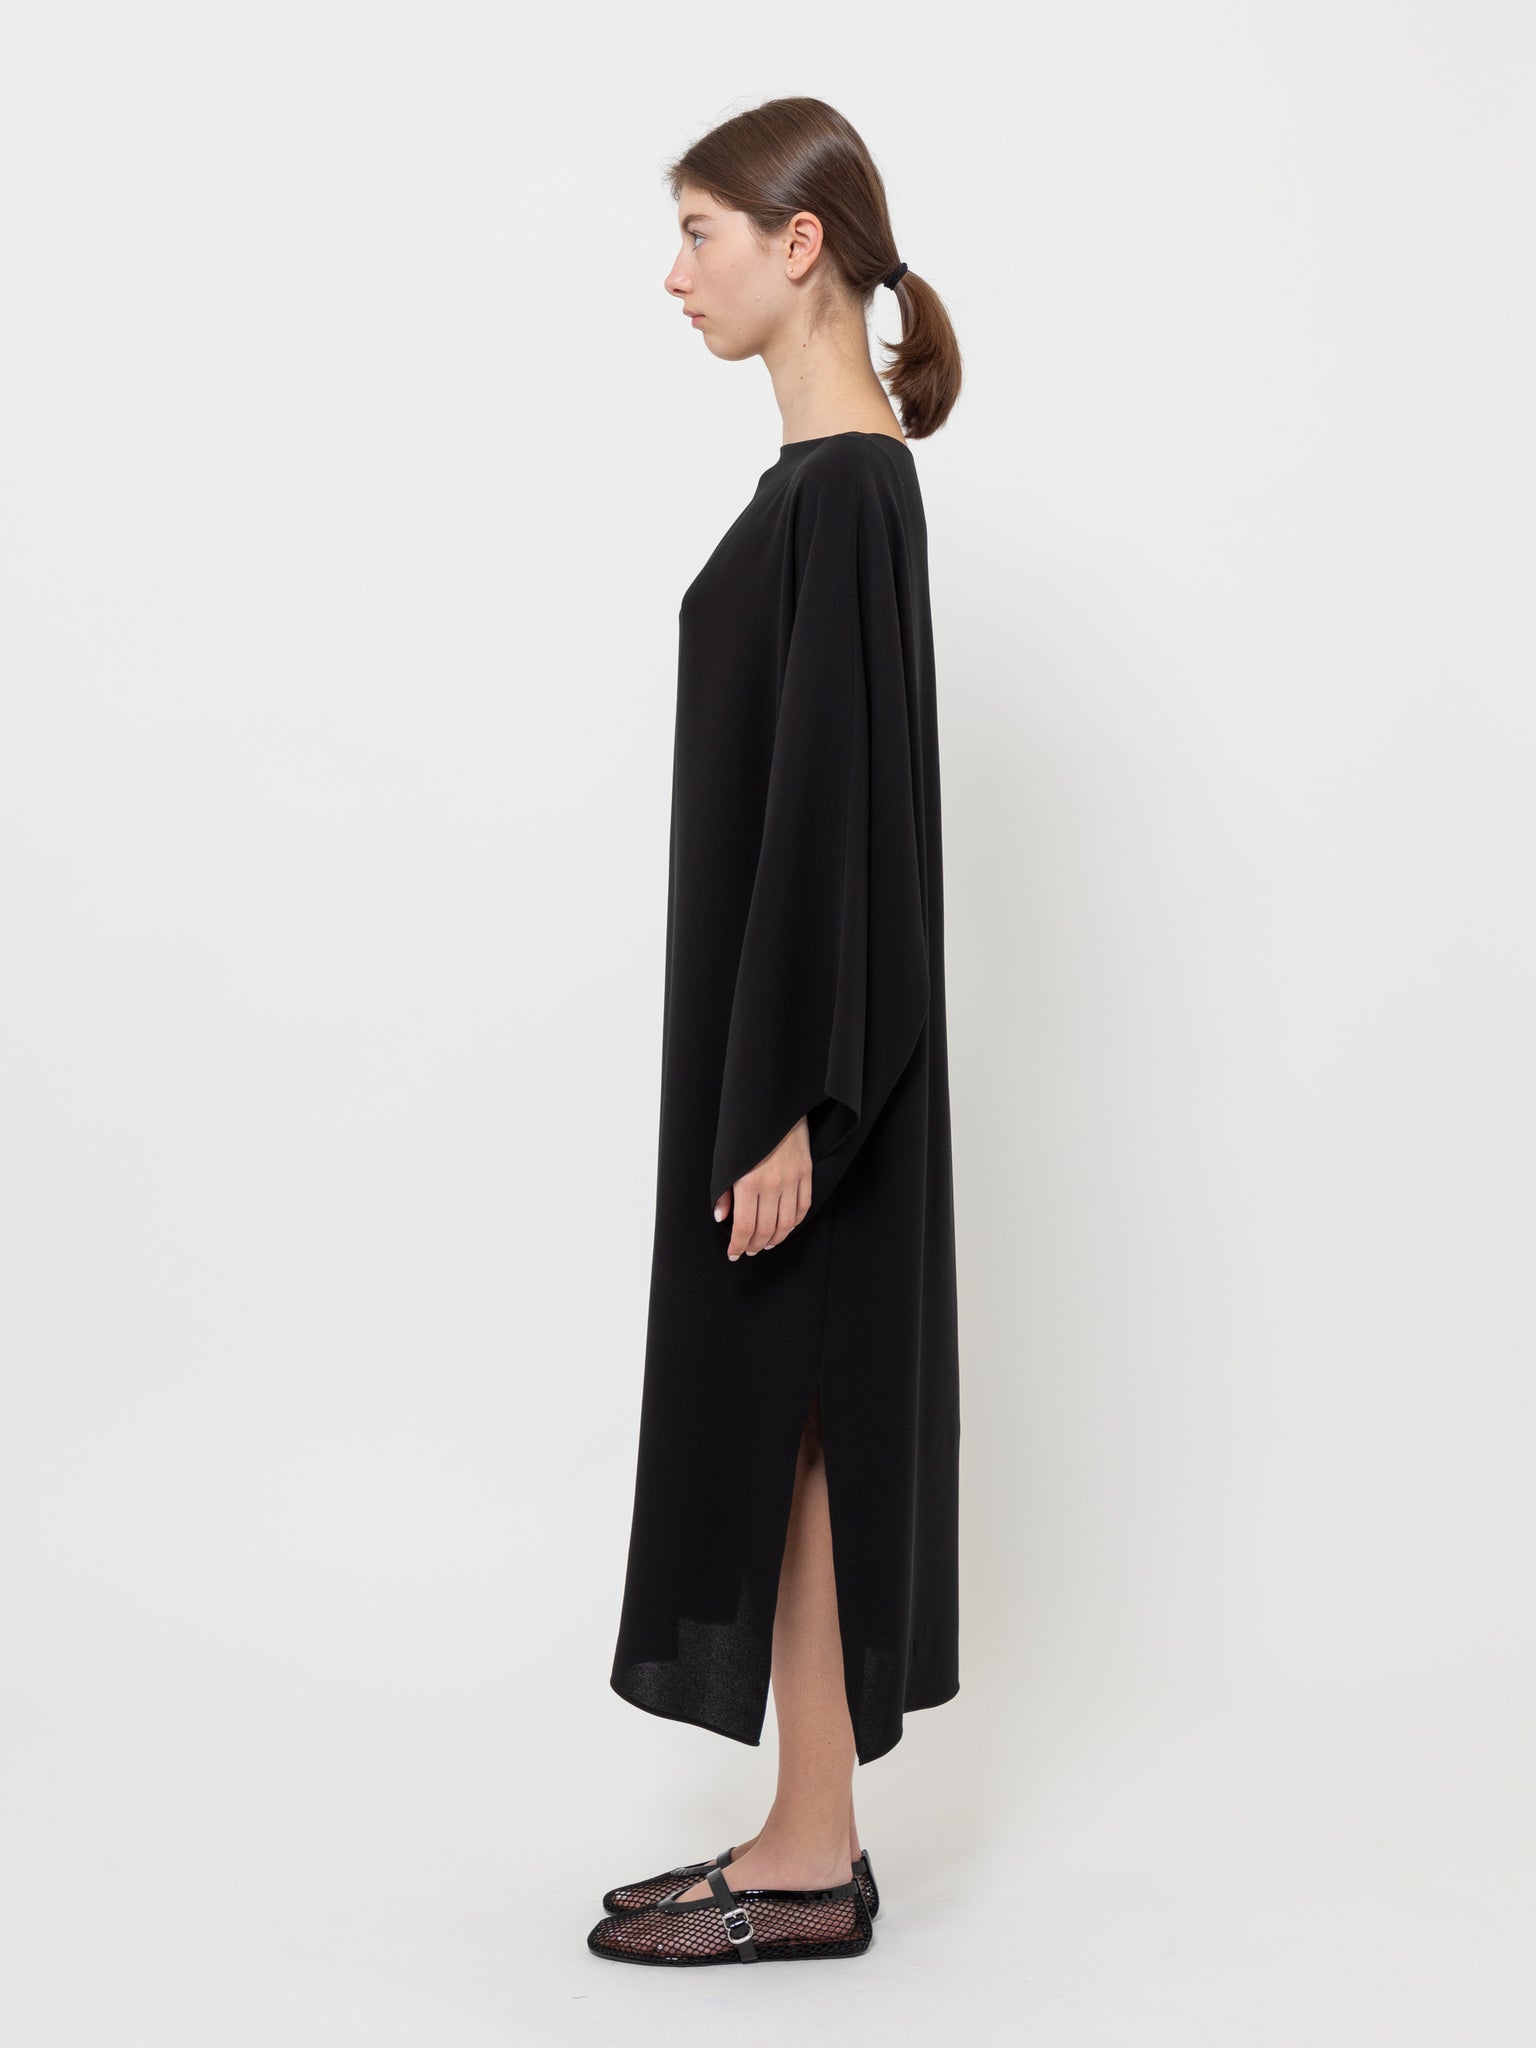 Matella Dress Black